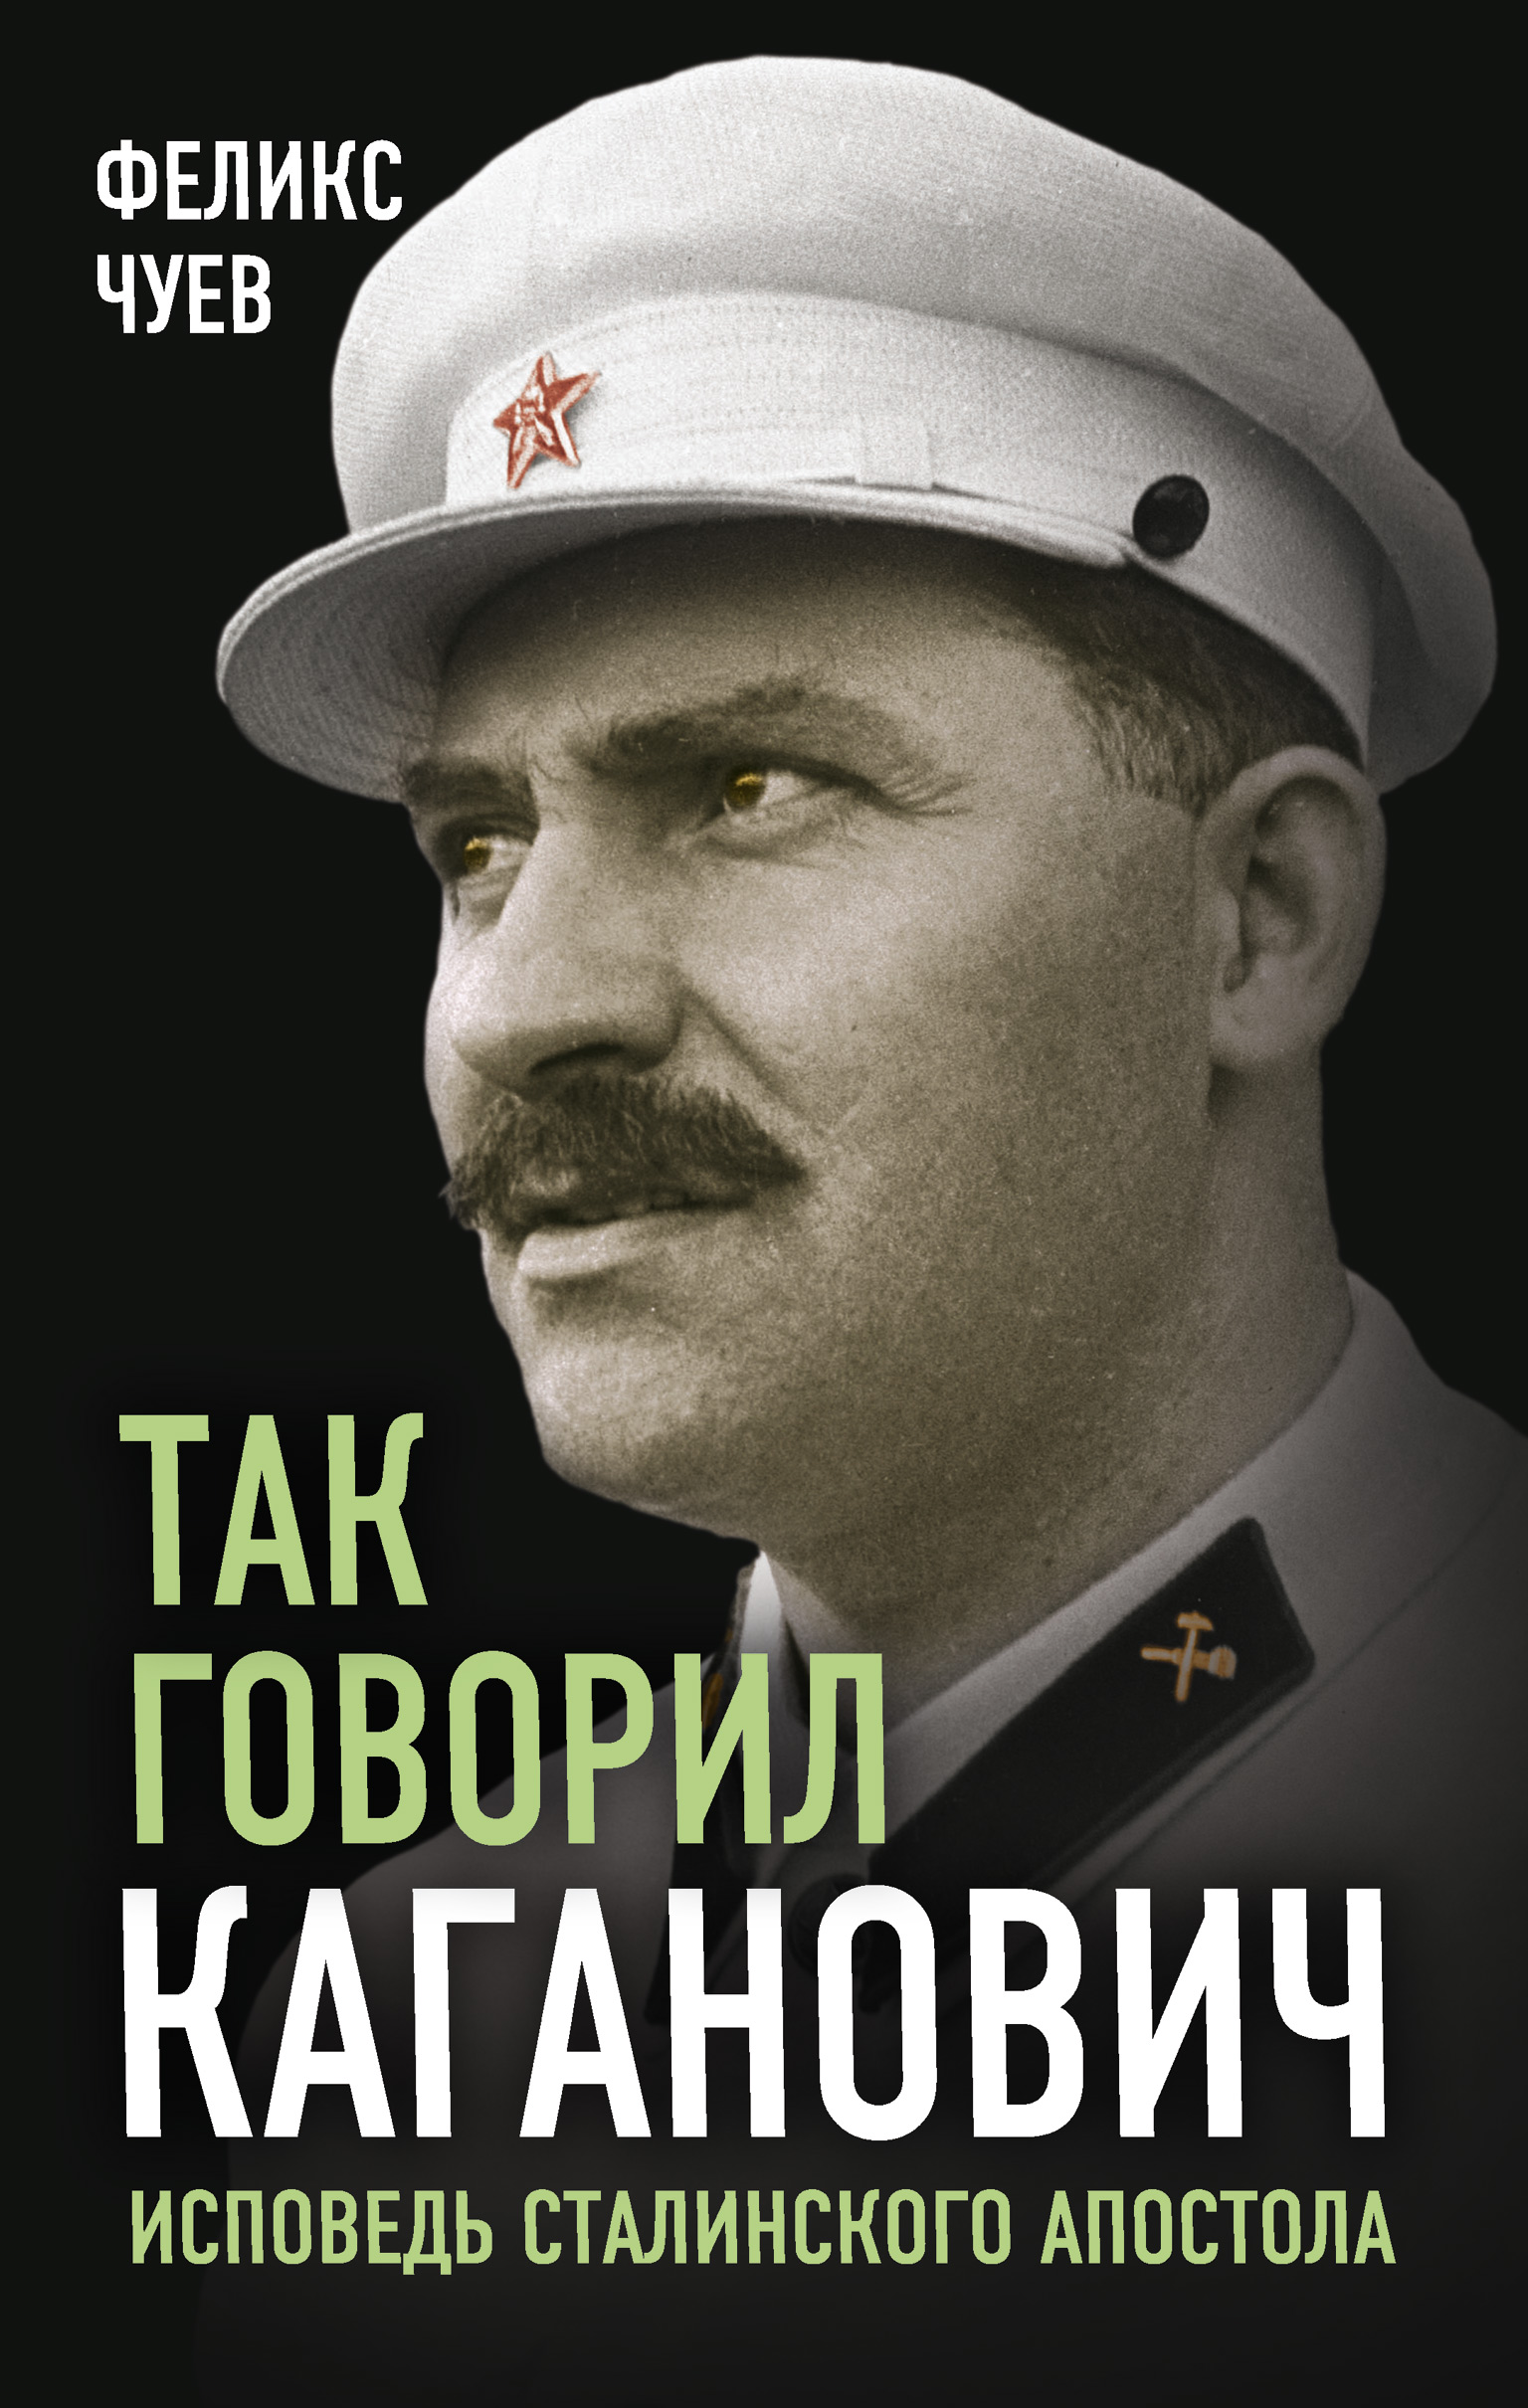 Исповедь сталина. Книги «так говорил Каганович».